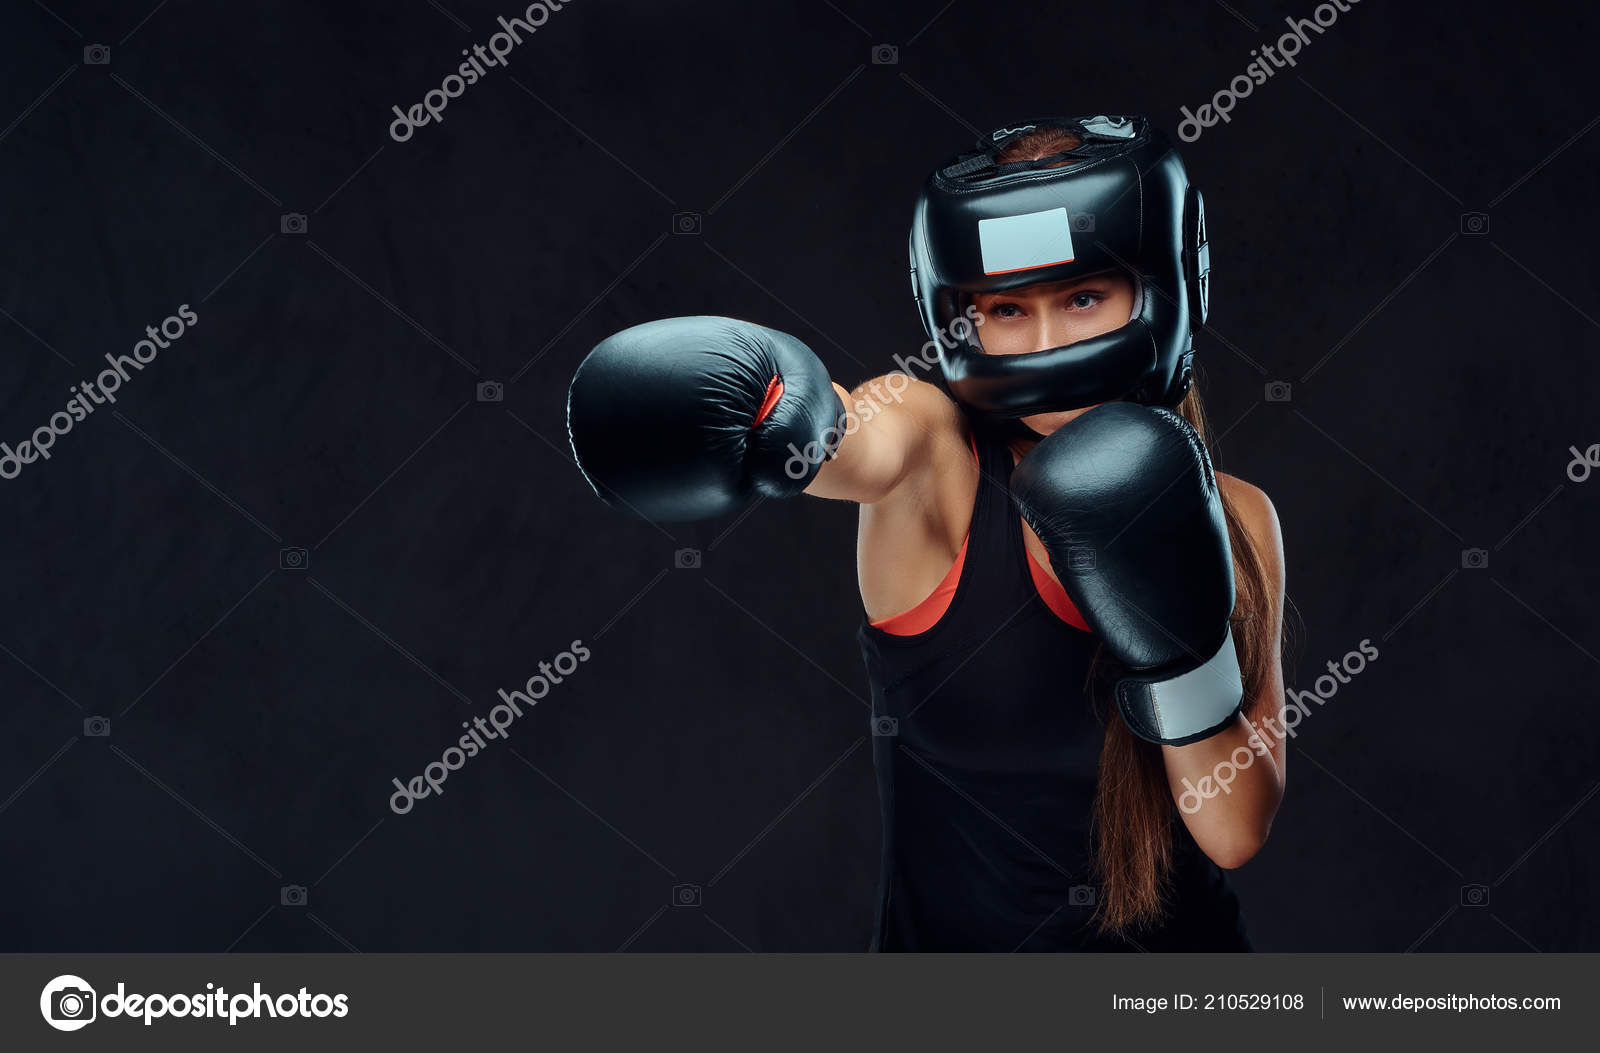 Sportive woman in sportswear wearing a protective helmet and